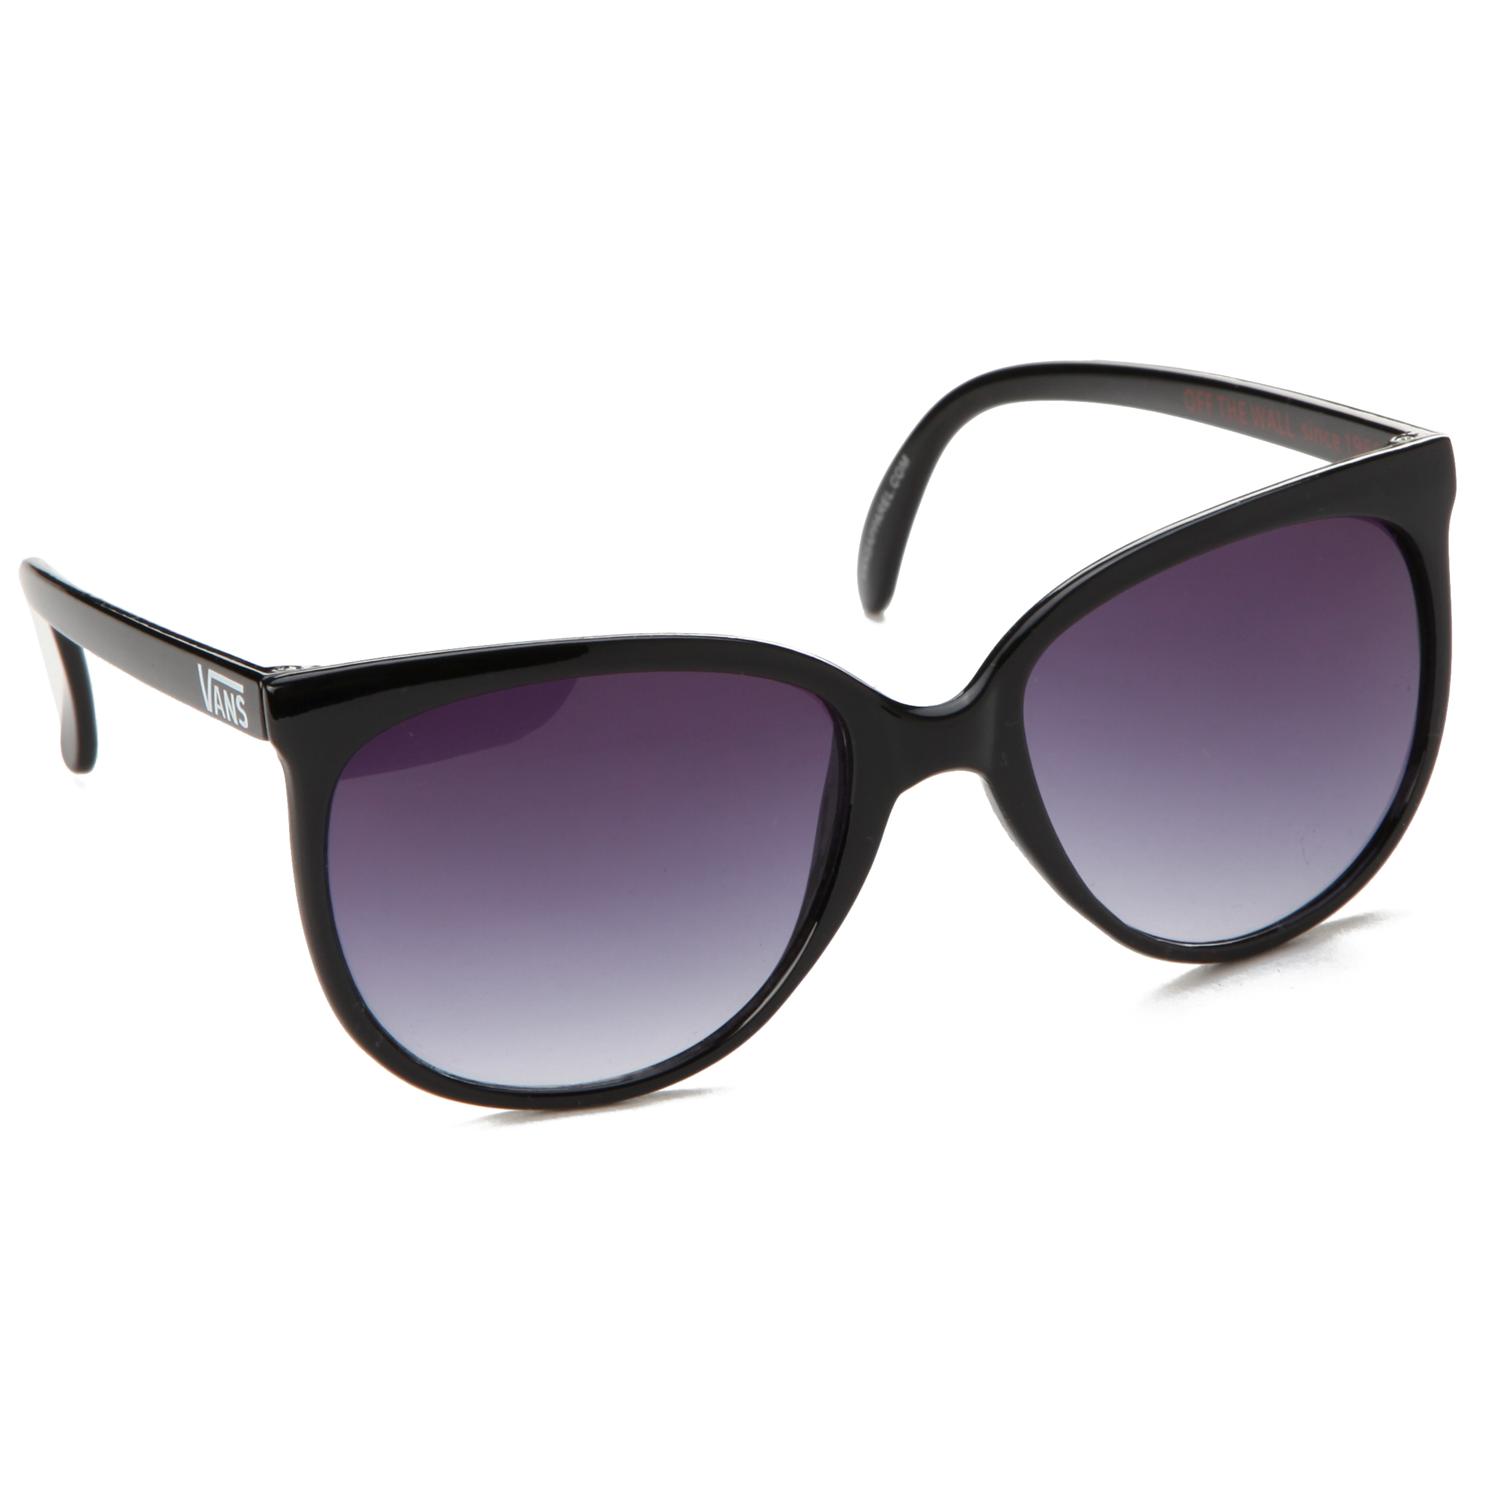 Vans 80s Sunglasses - Women's | evo